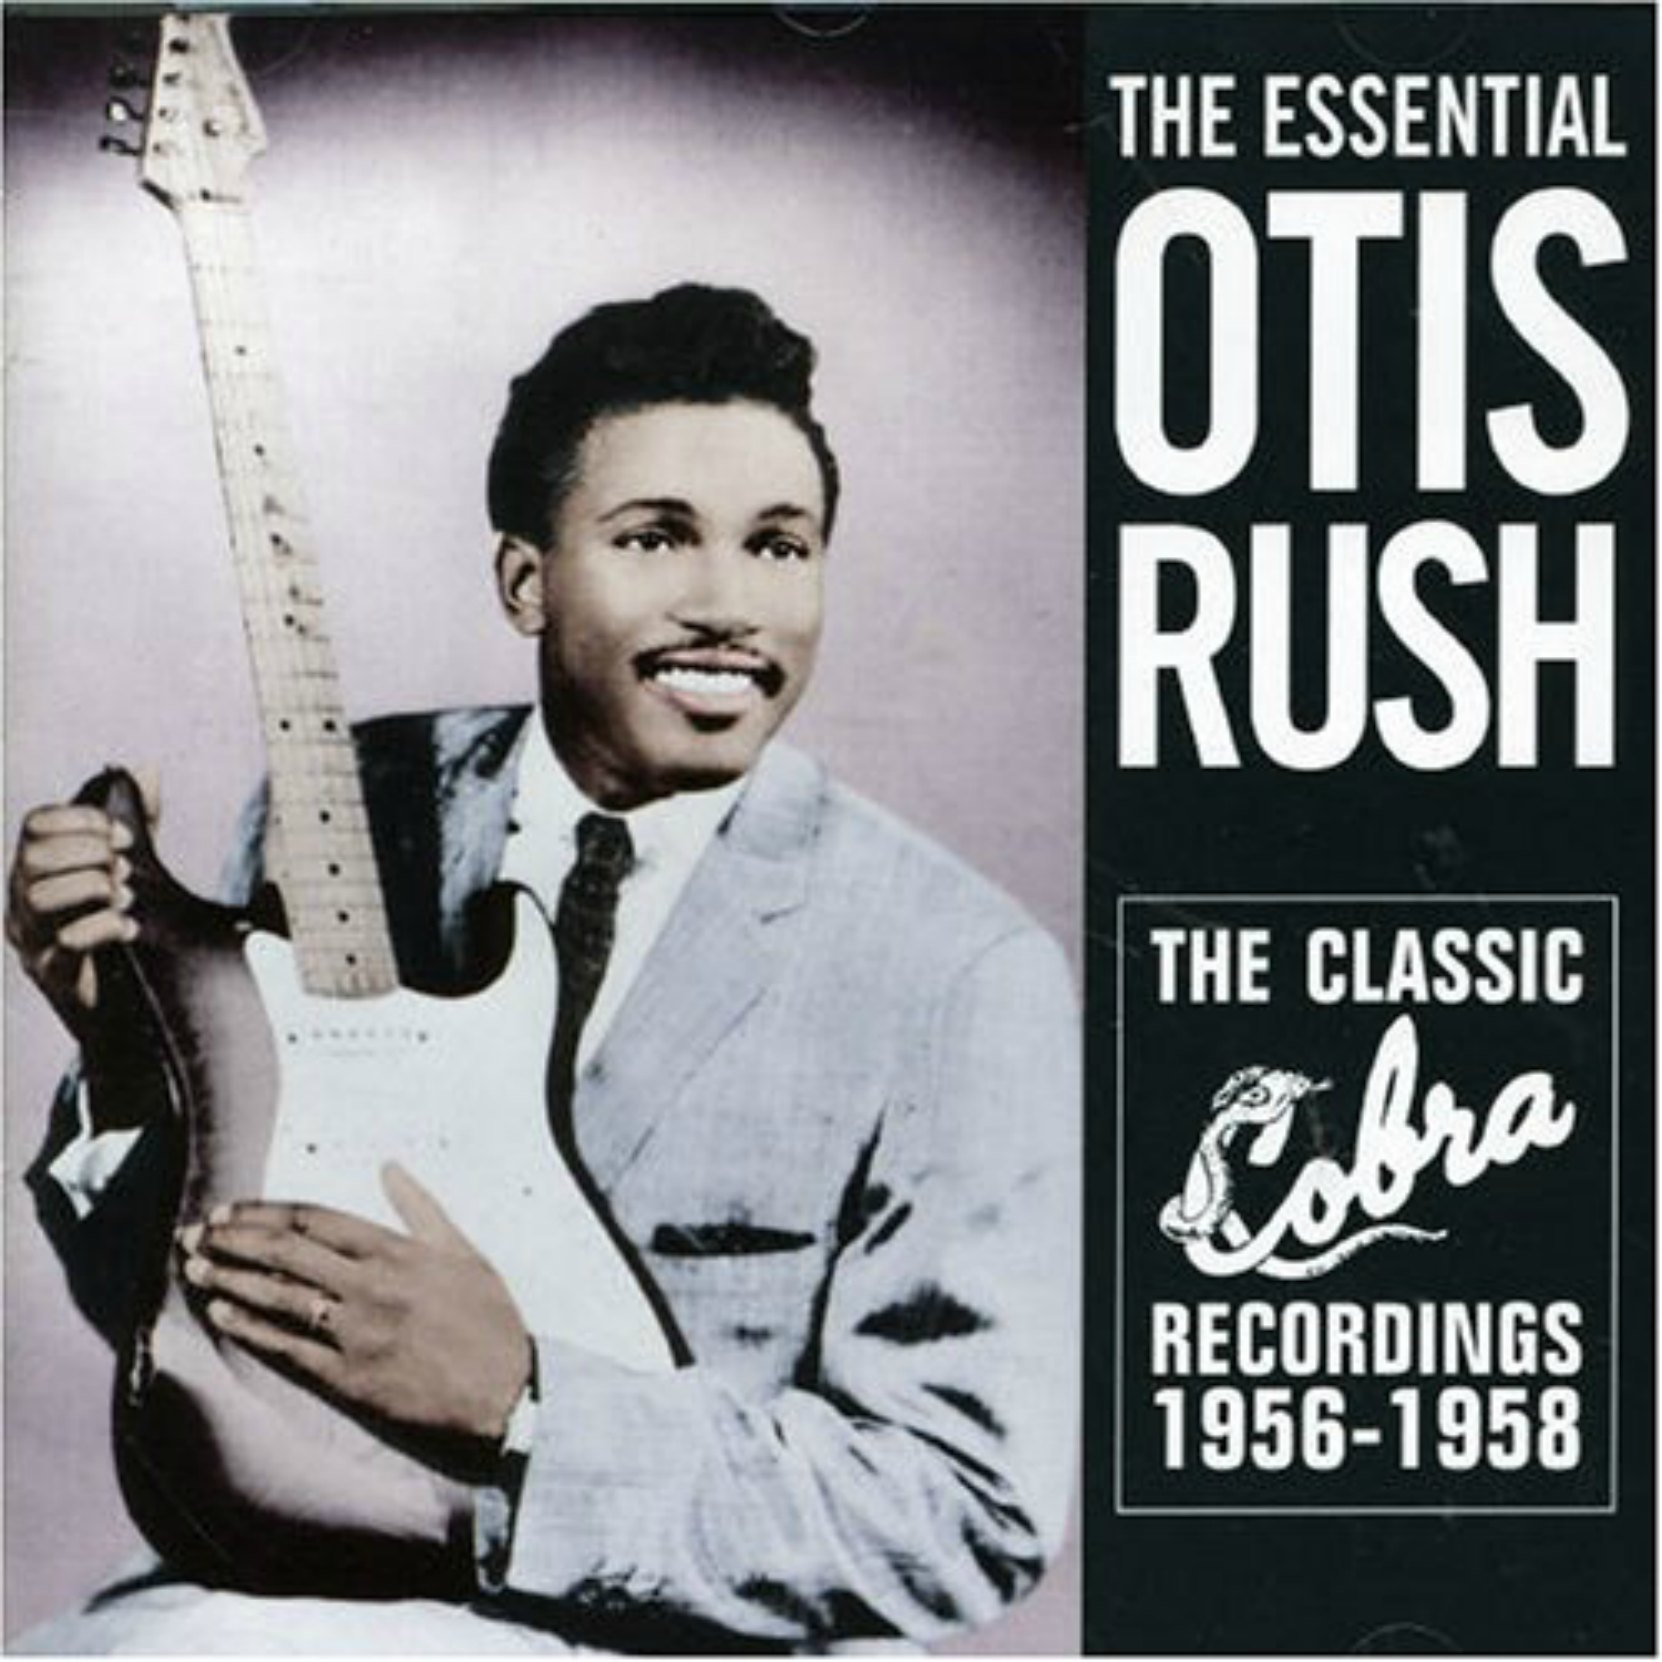 CD cover, Classic Cobra Records Recordings 1956-1958 by Otis Rush